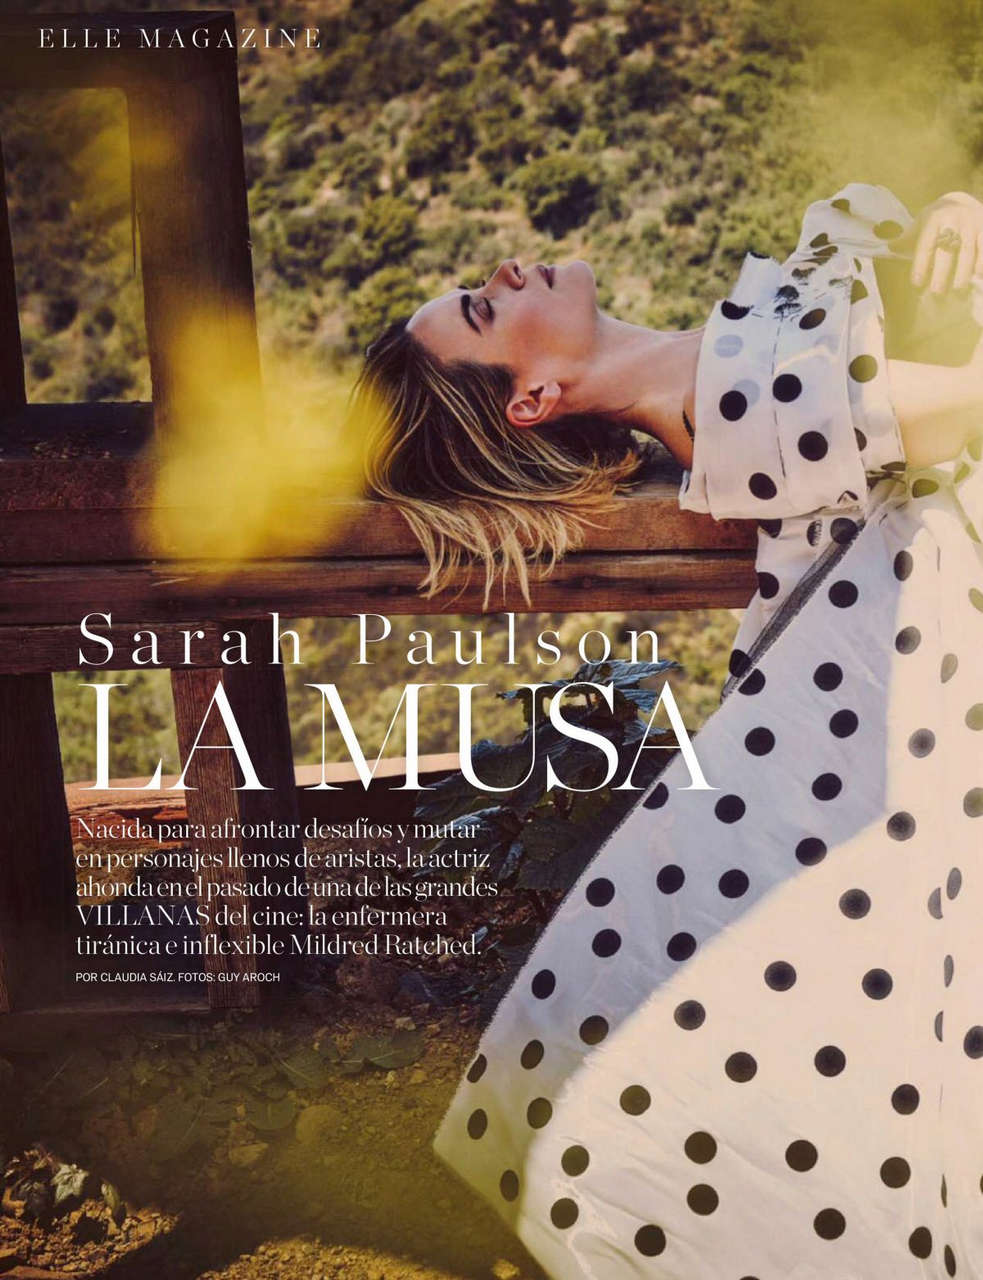 Sarah Paulson Elle Magazine Spain September